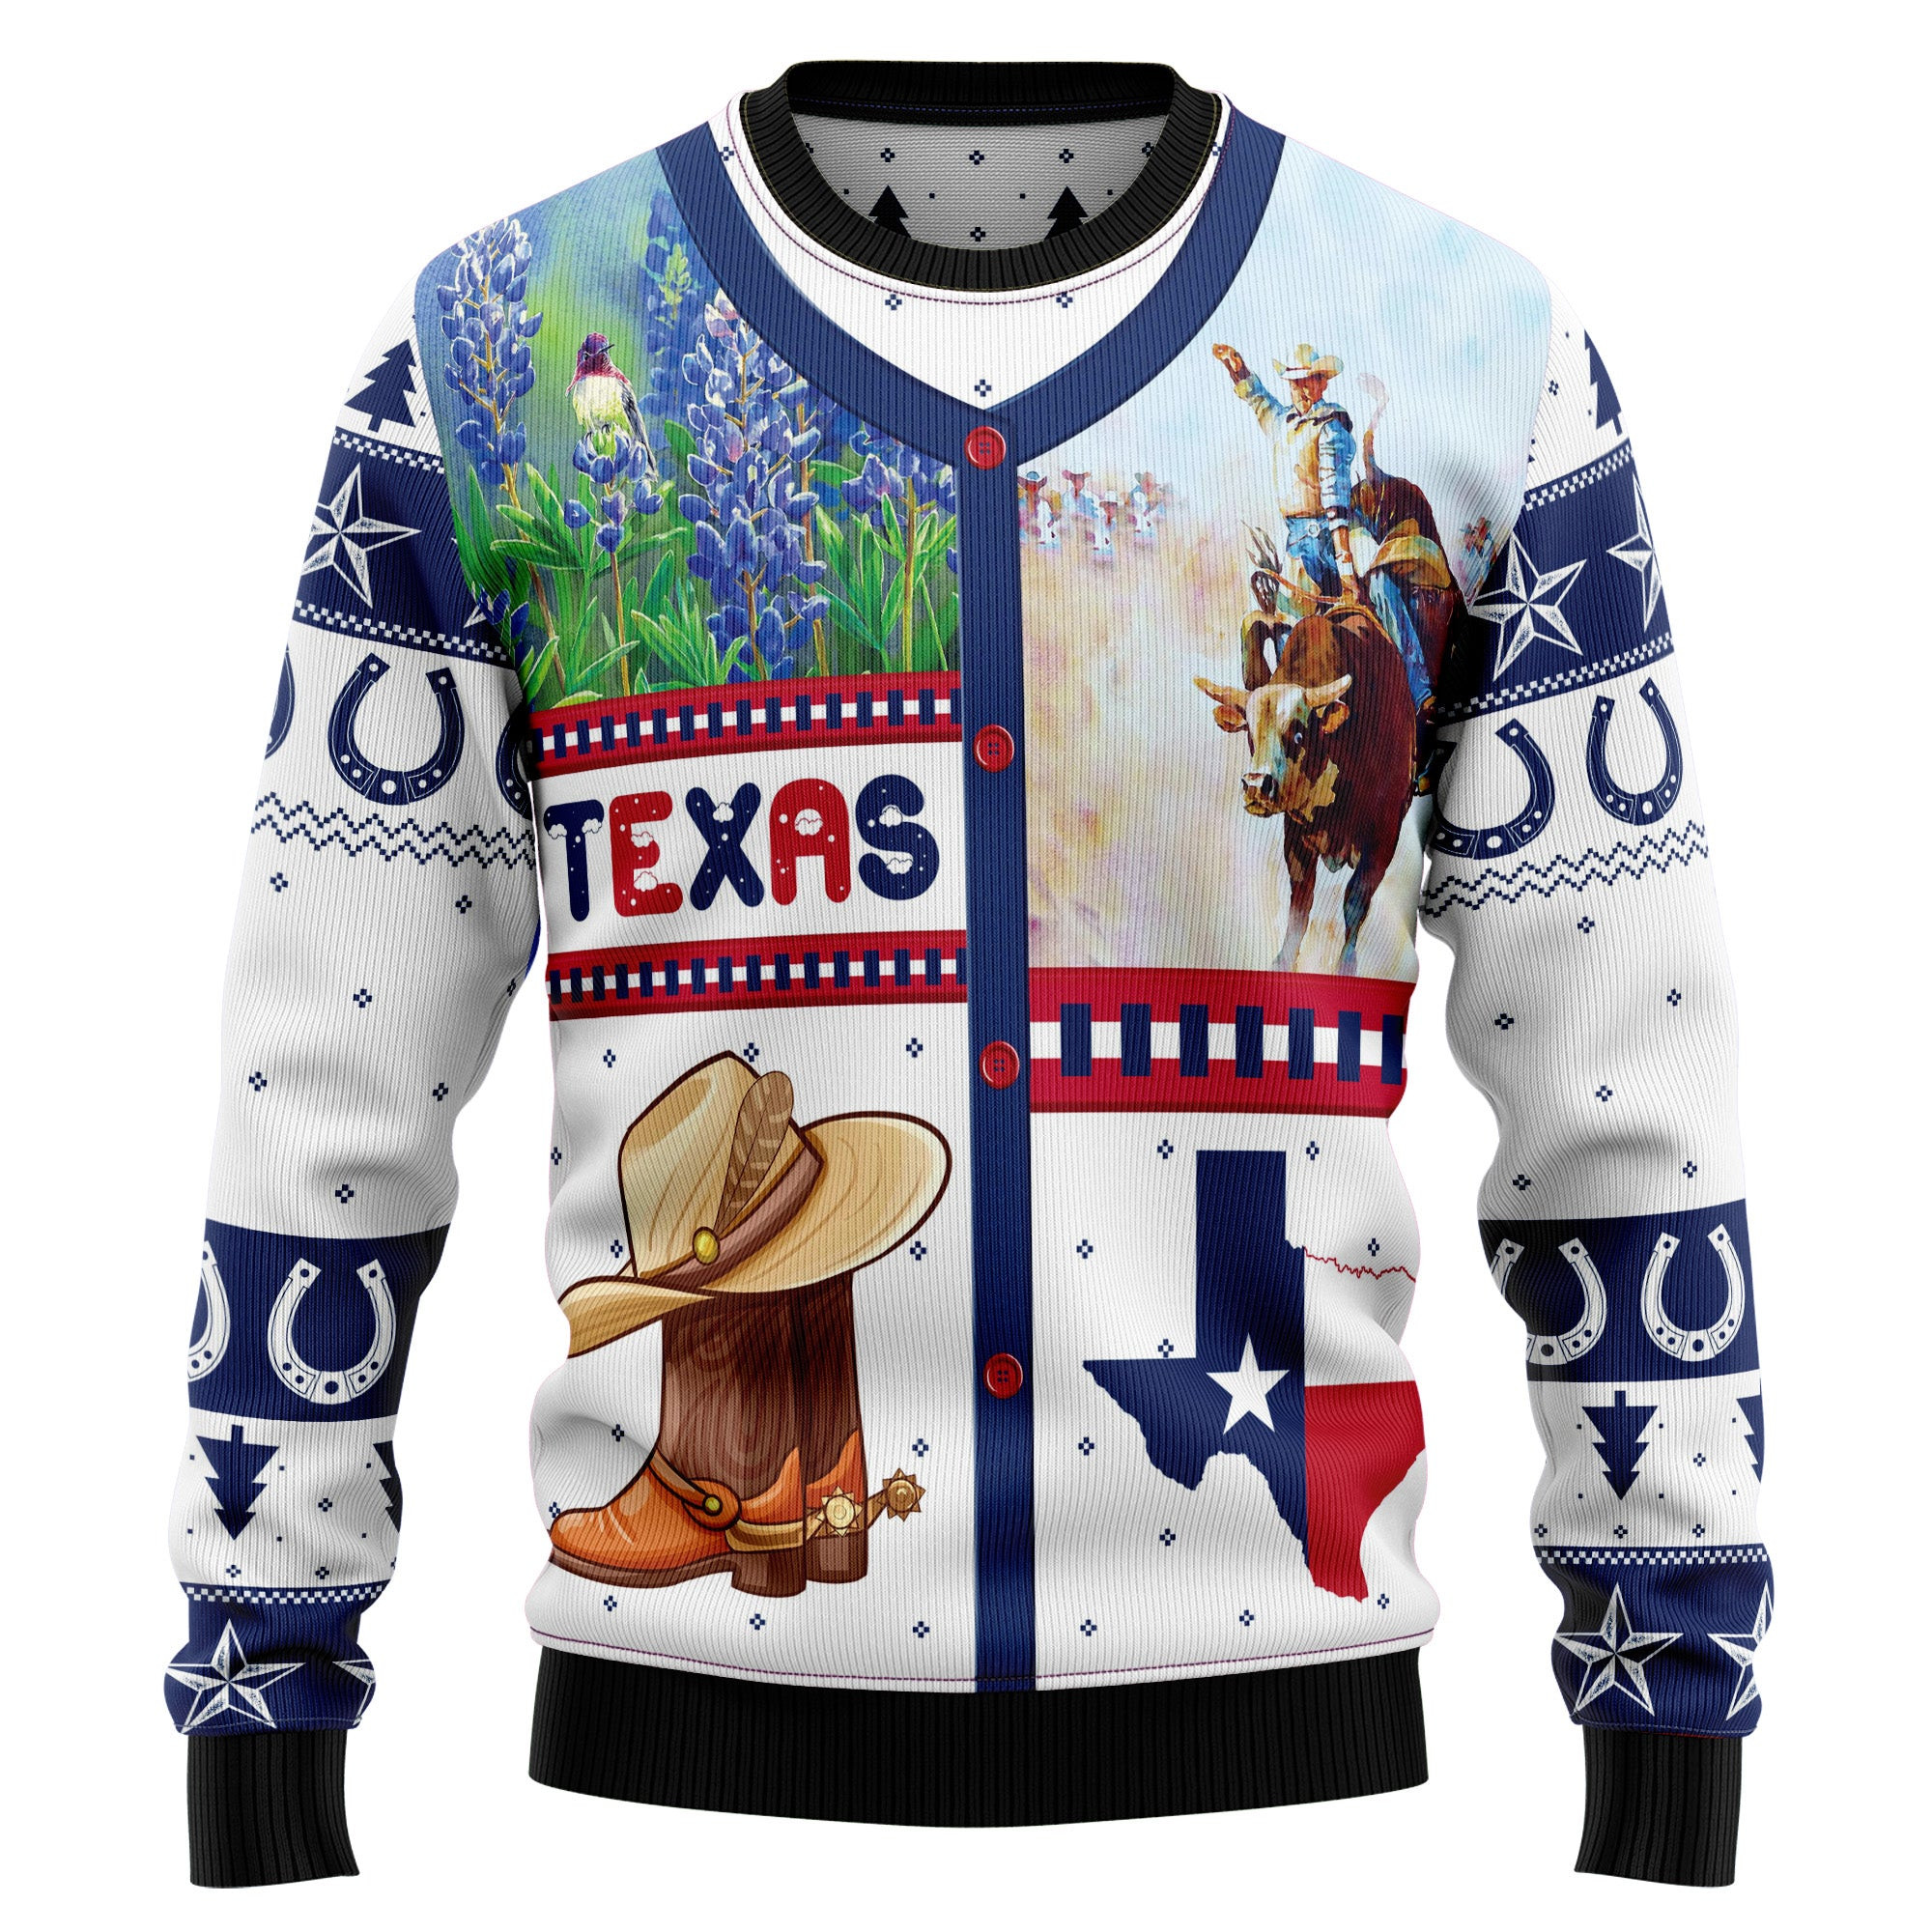 Awesome Texas Ugly Christmas Sweater